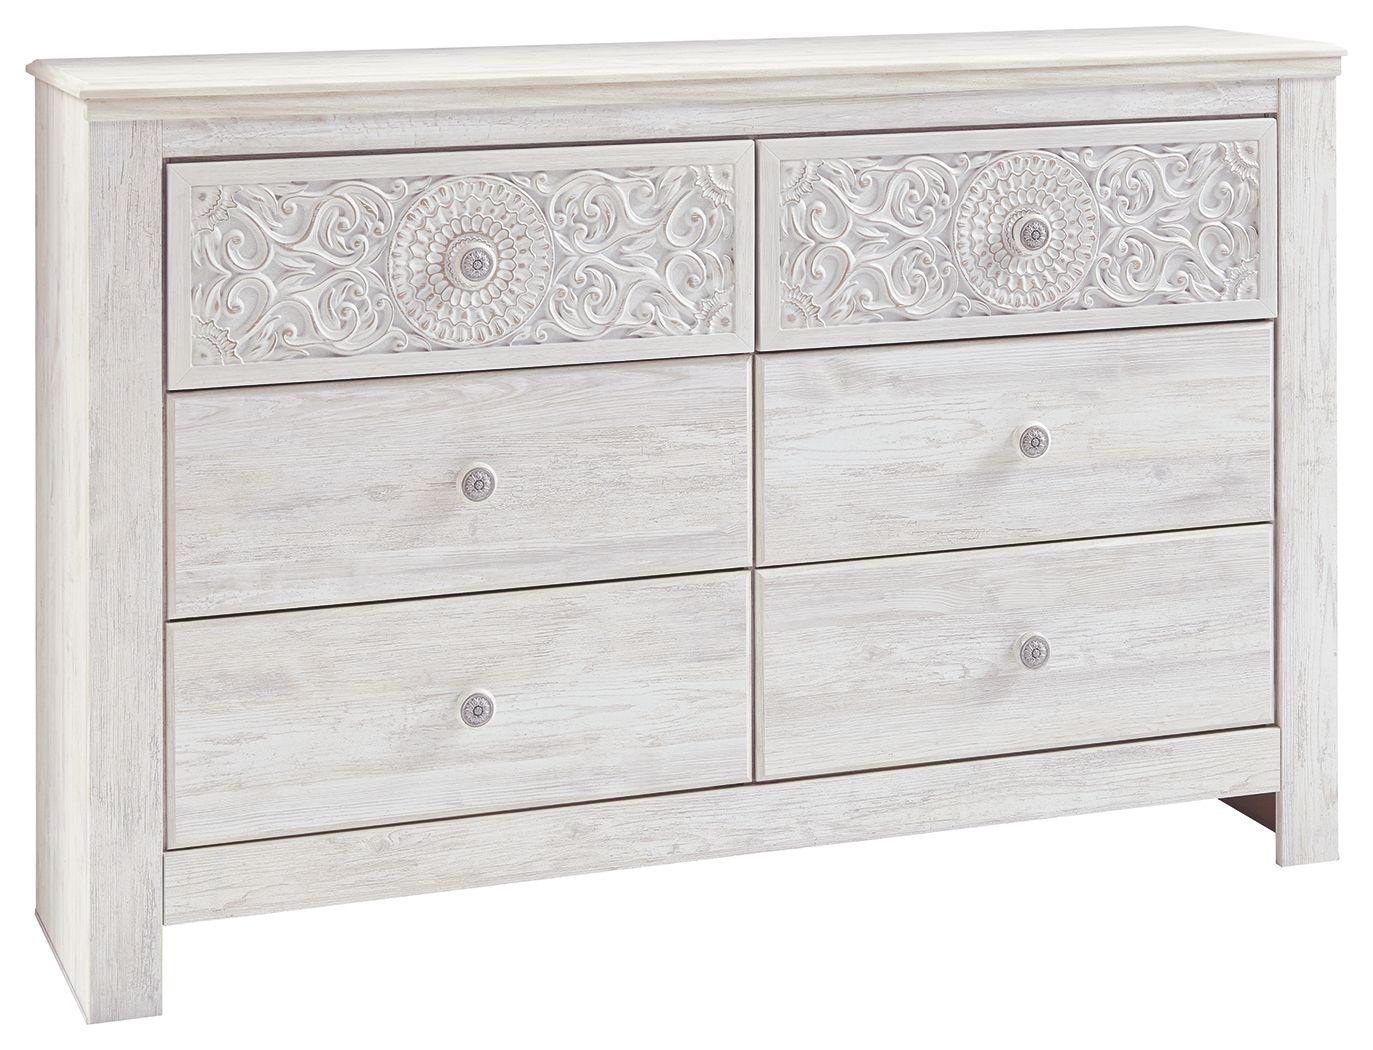 Ashley Furniture - Paxberry - Whitewash - Six Drawer Dresser - Medallion Drawer Pulls - 5th Avenue Furniture